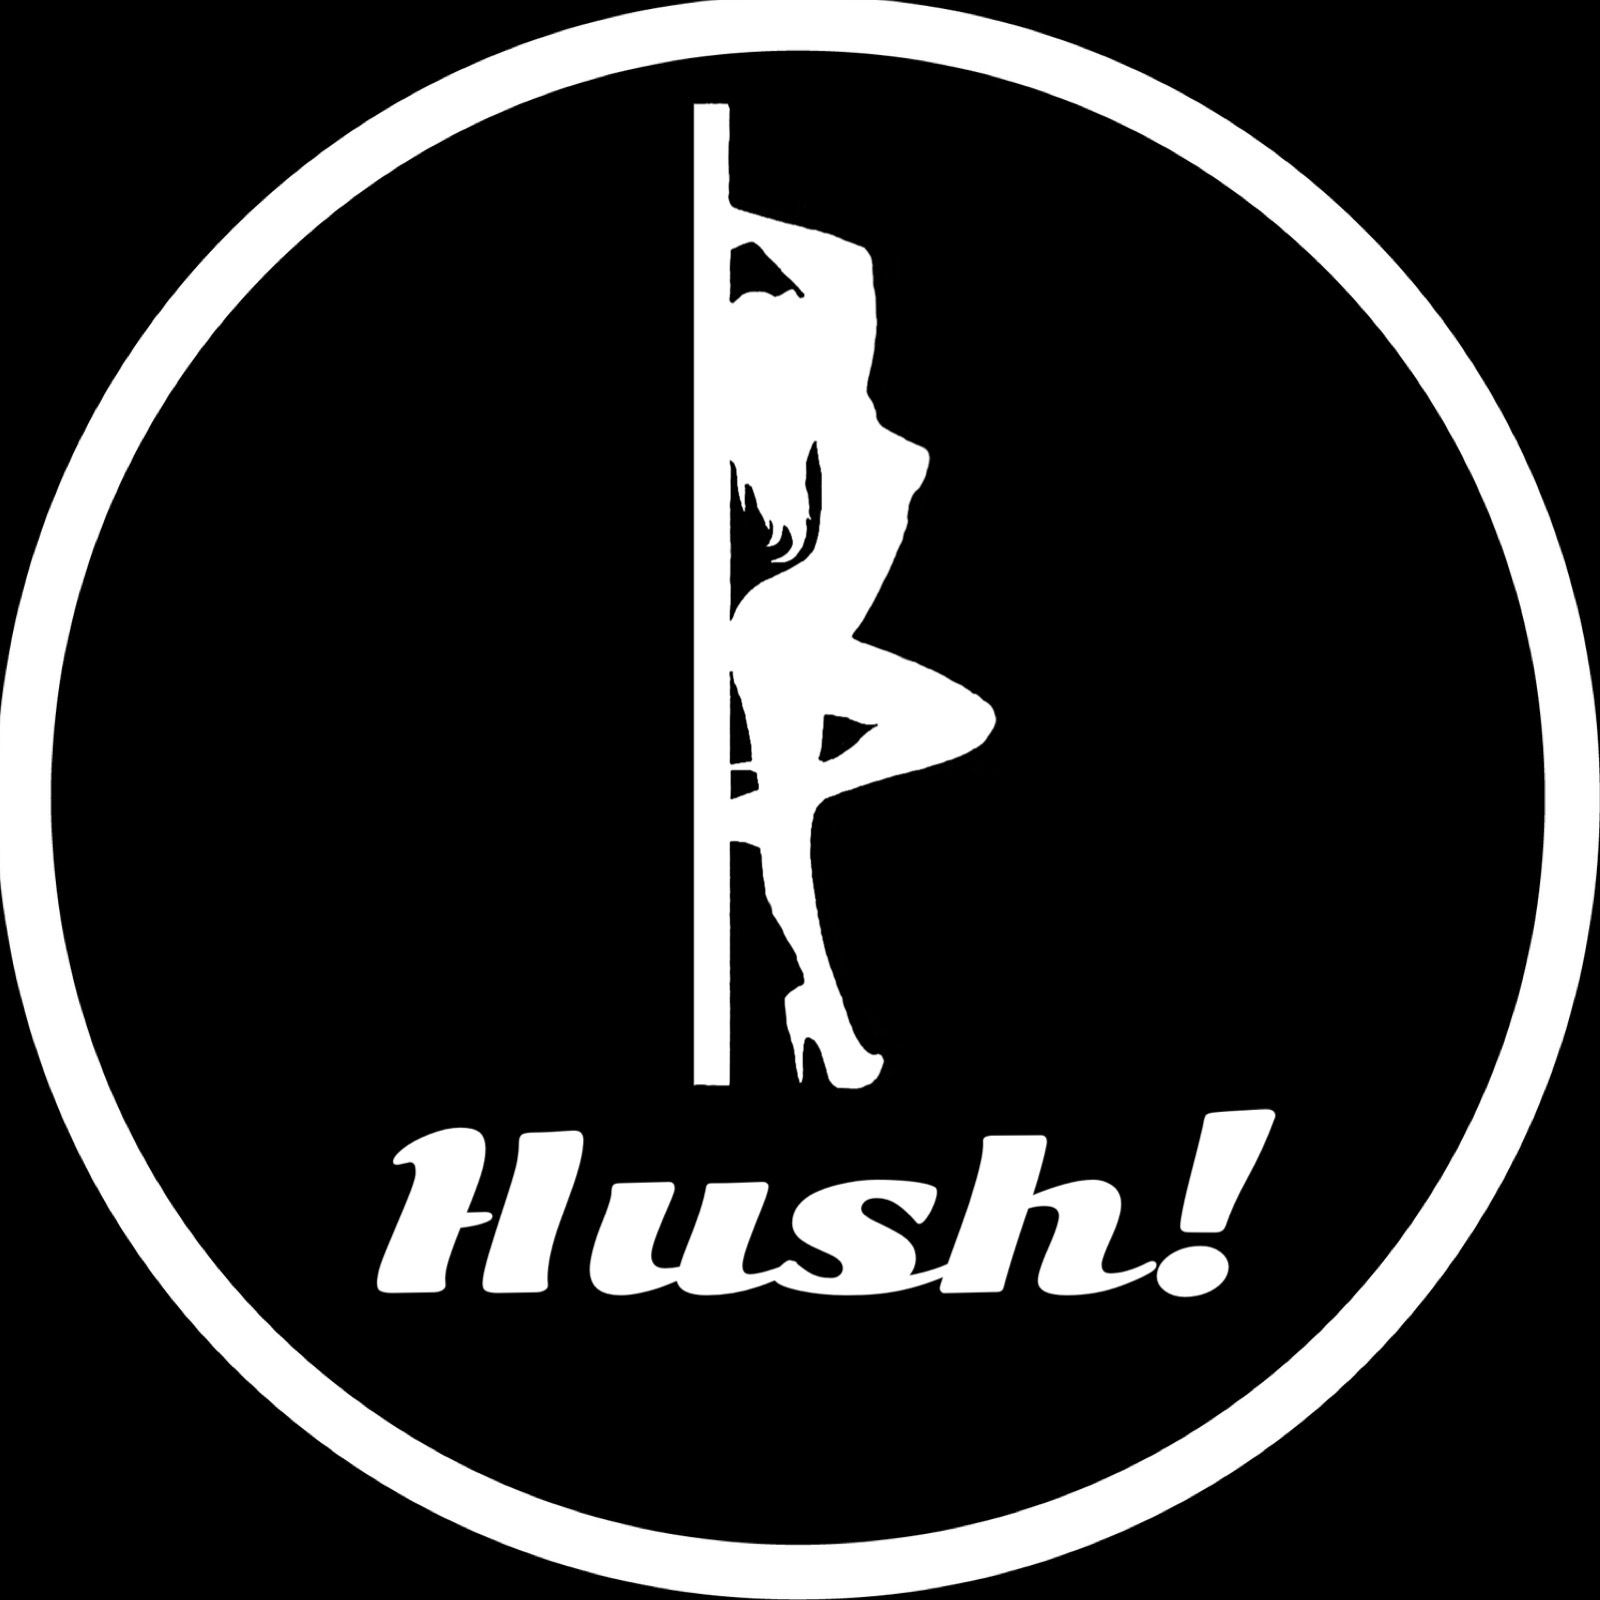 Hush! - Hush! Vol. 69- Stripper Stories